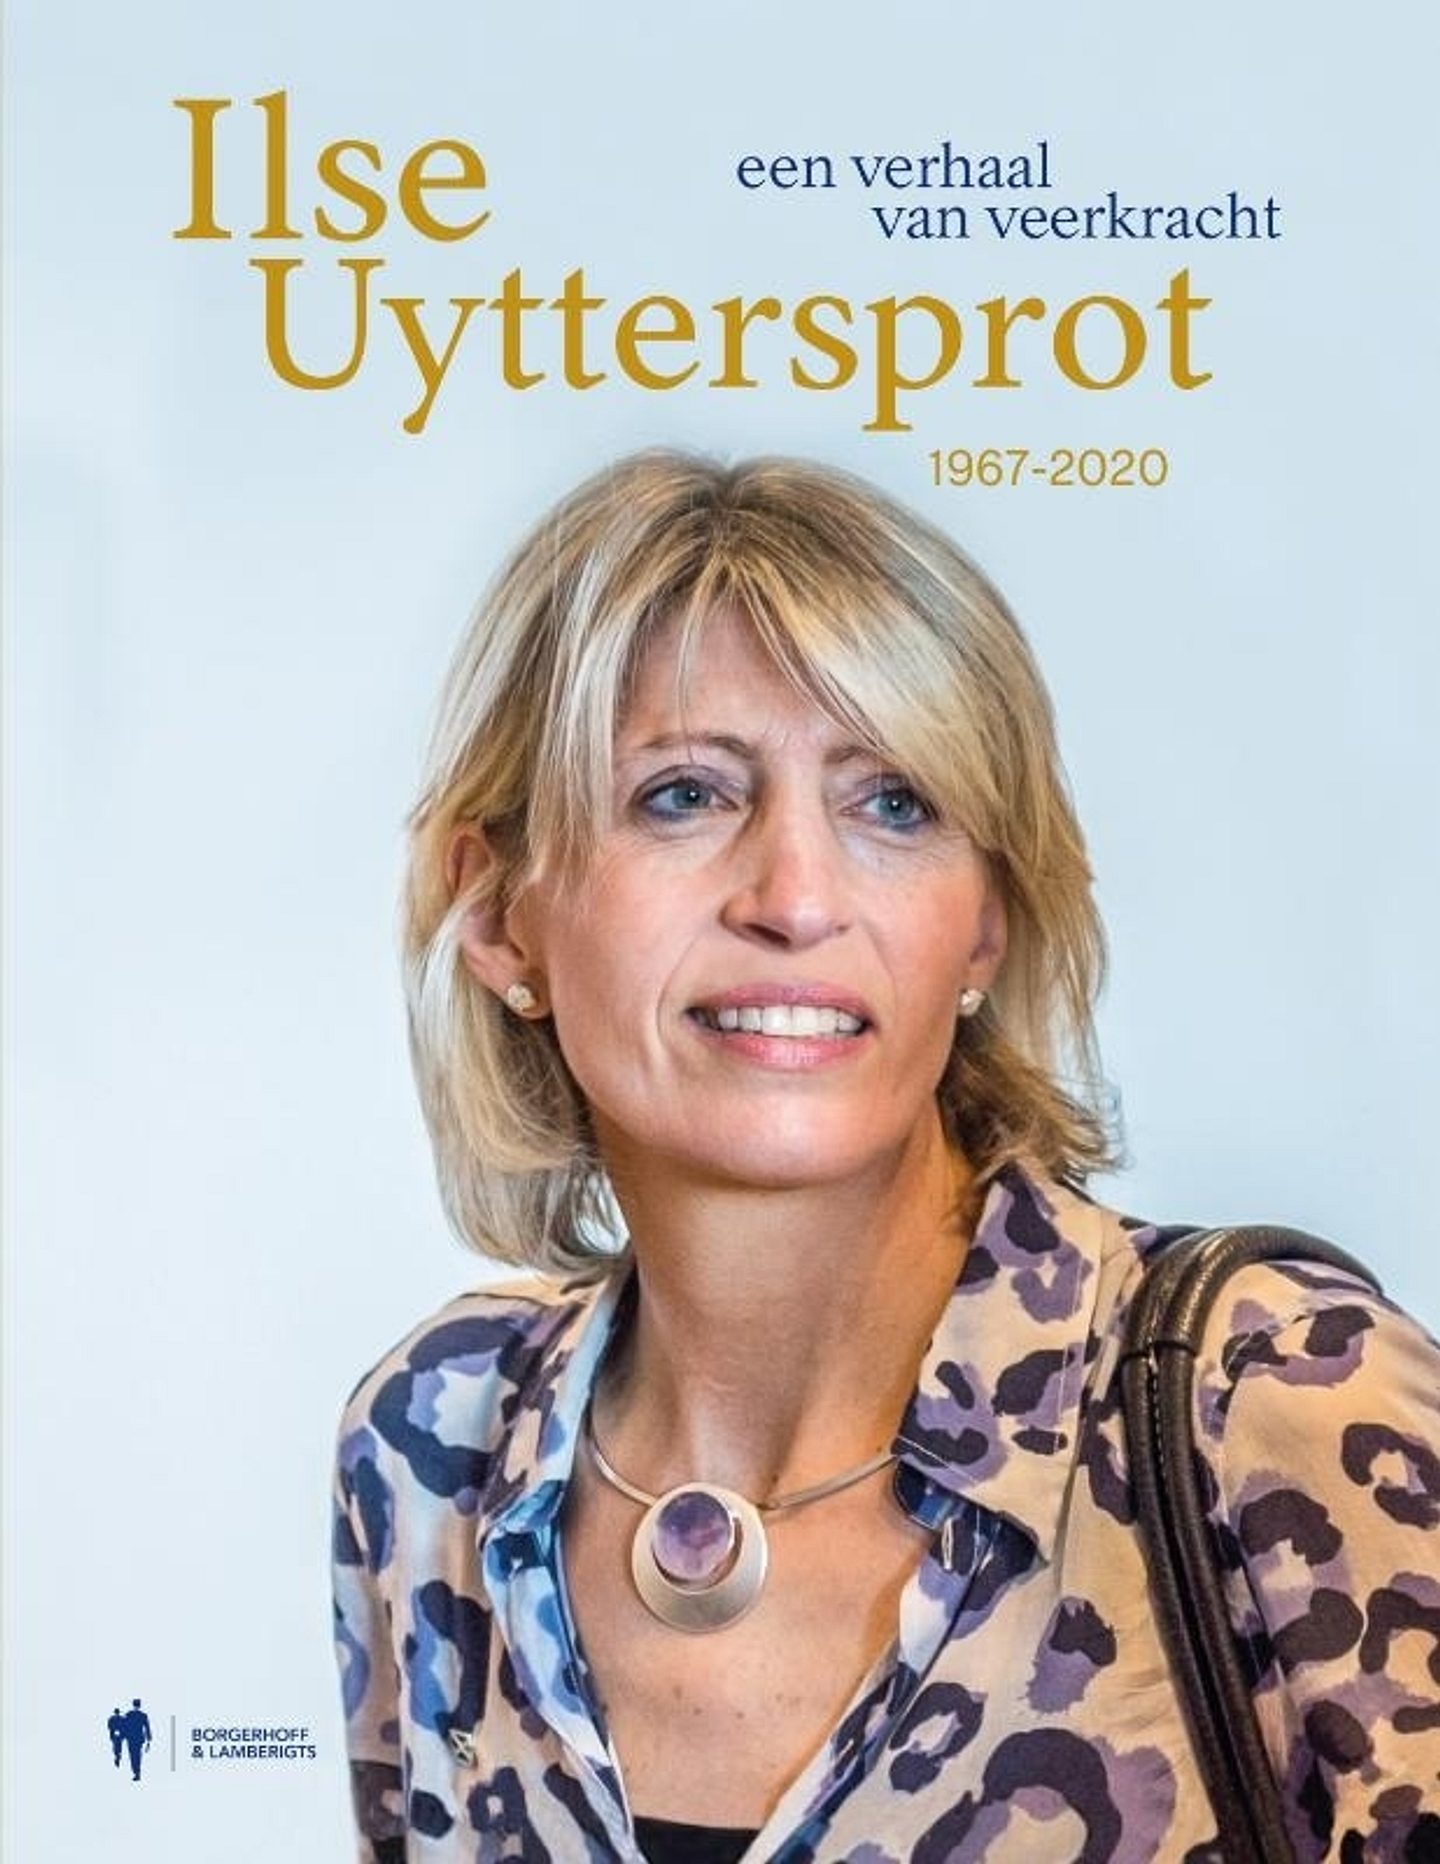 Ilse Uyttersprot